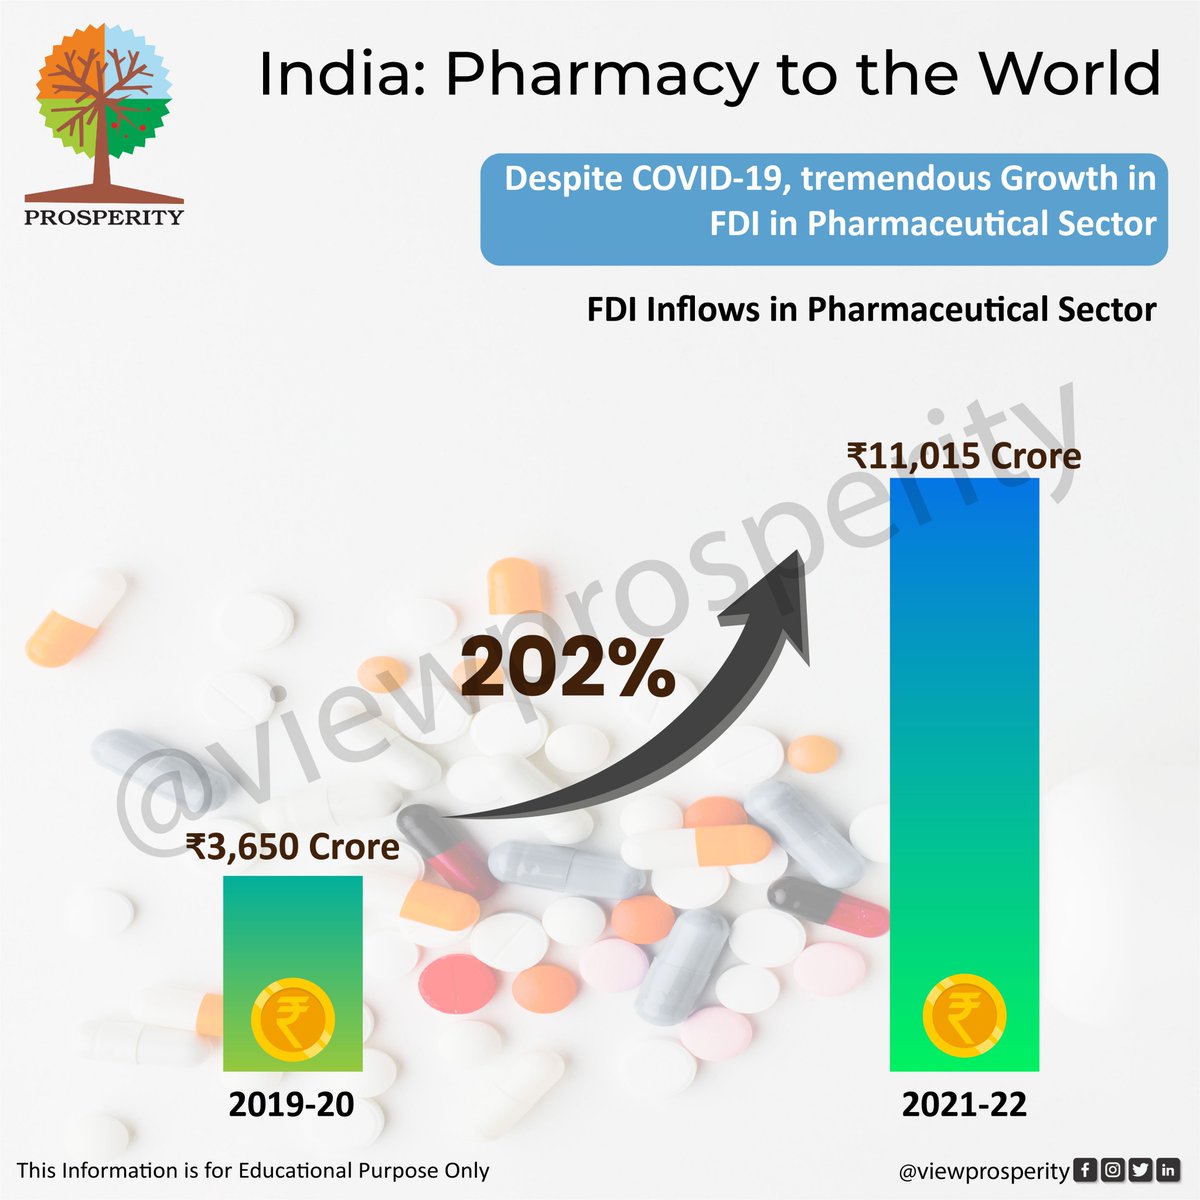 India: Pharmacy to the World
Follow us @viewprosperity for Informative Updates.

#india #pharmacy #pharmaceuticalsector #growth #FDI #covid19 #world #medicien #vaccine #sector #health #pharma #company #pharmagrowth #market #vaccination #viewprospeiry #instagram